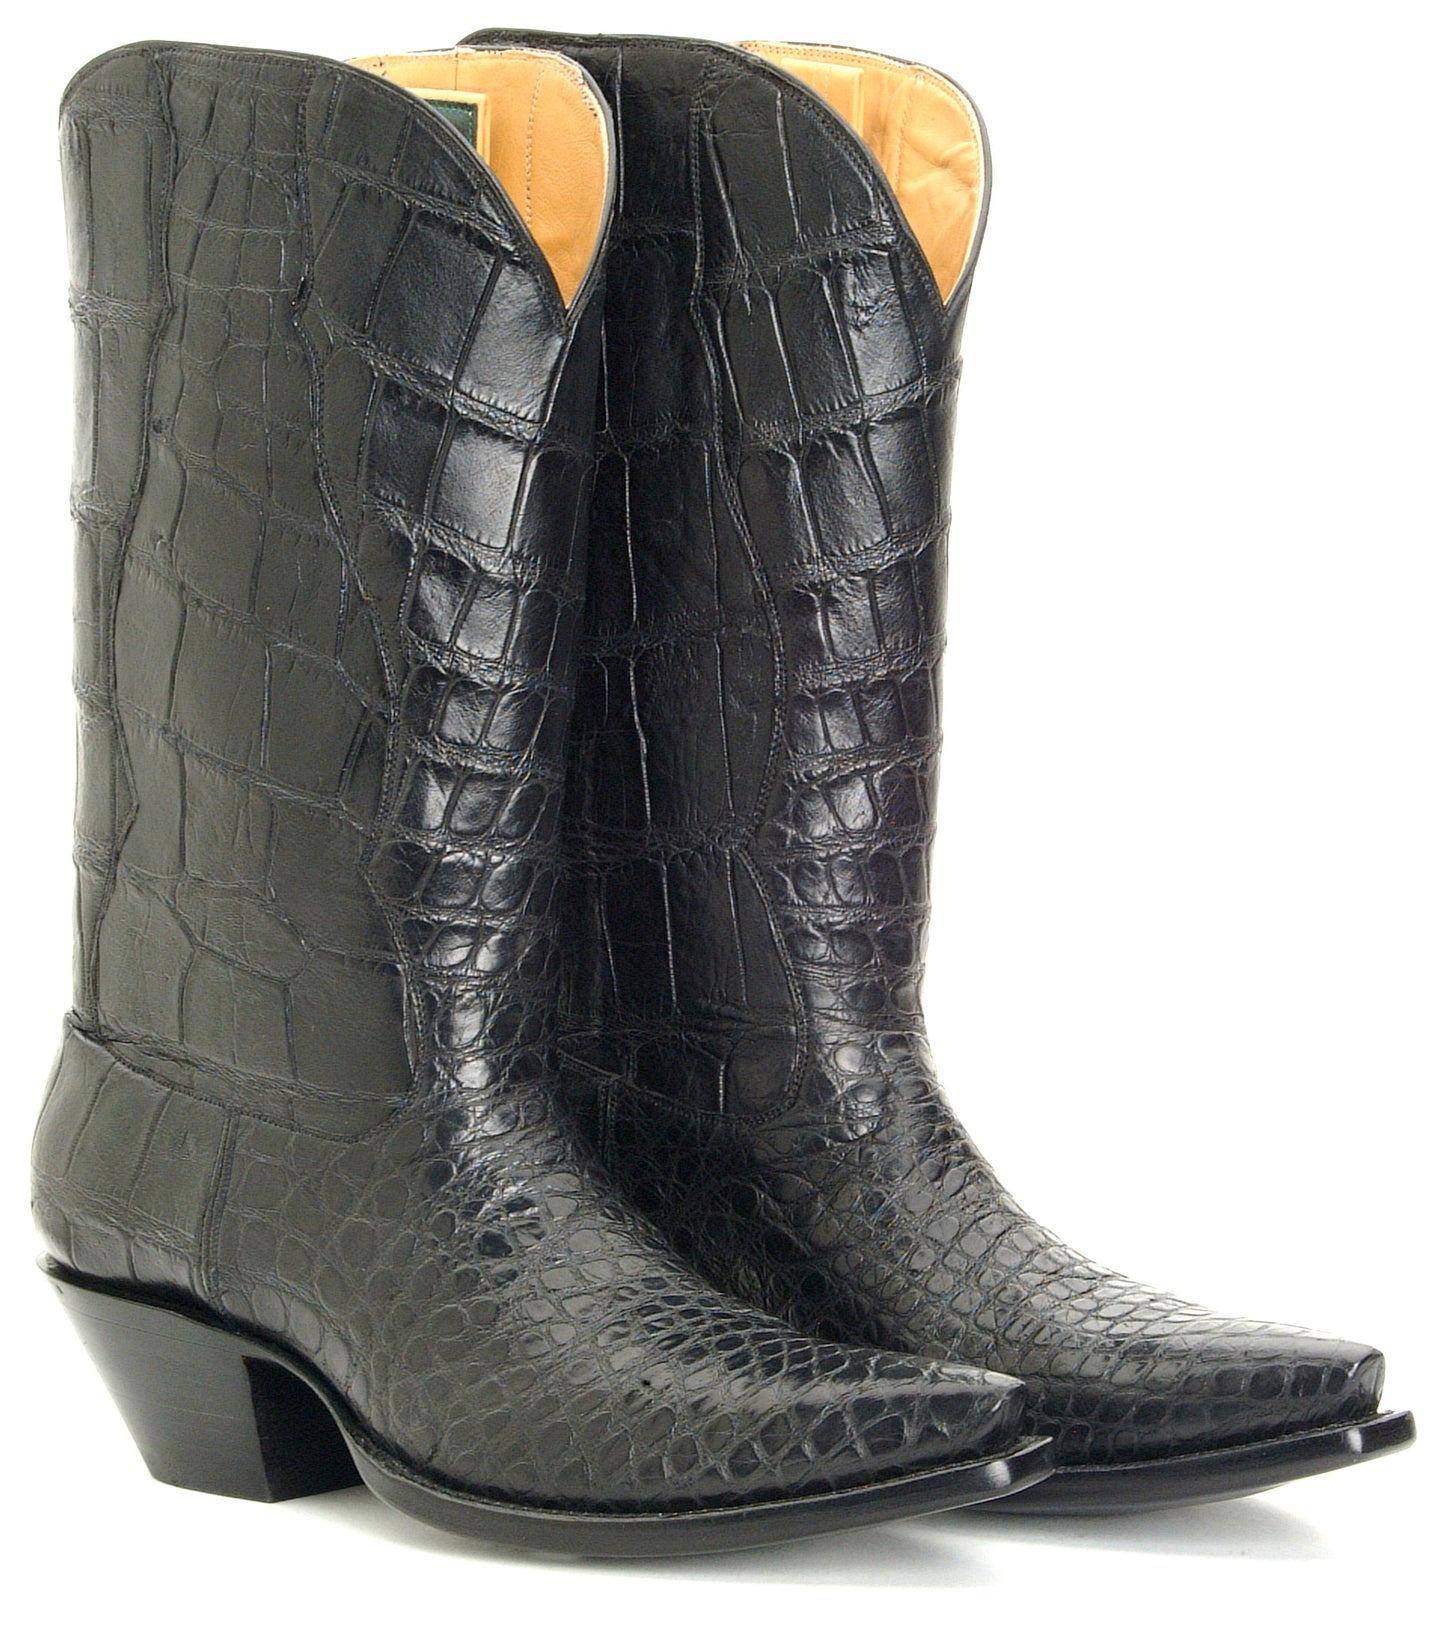 Seamless Alligator boot pair